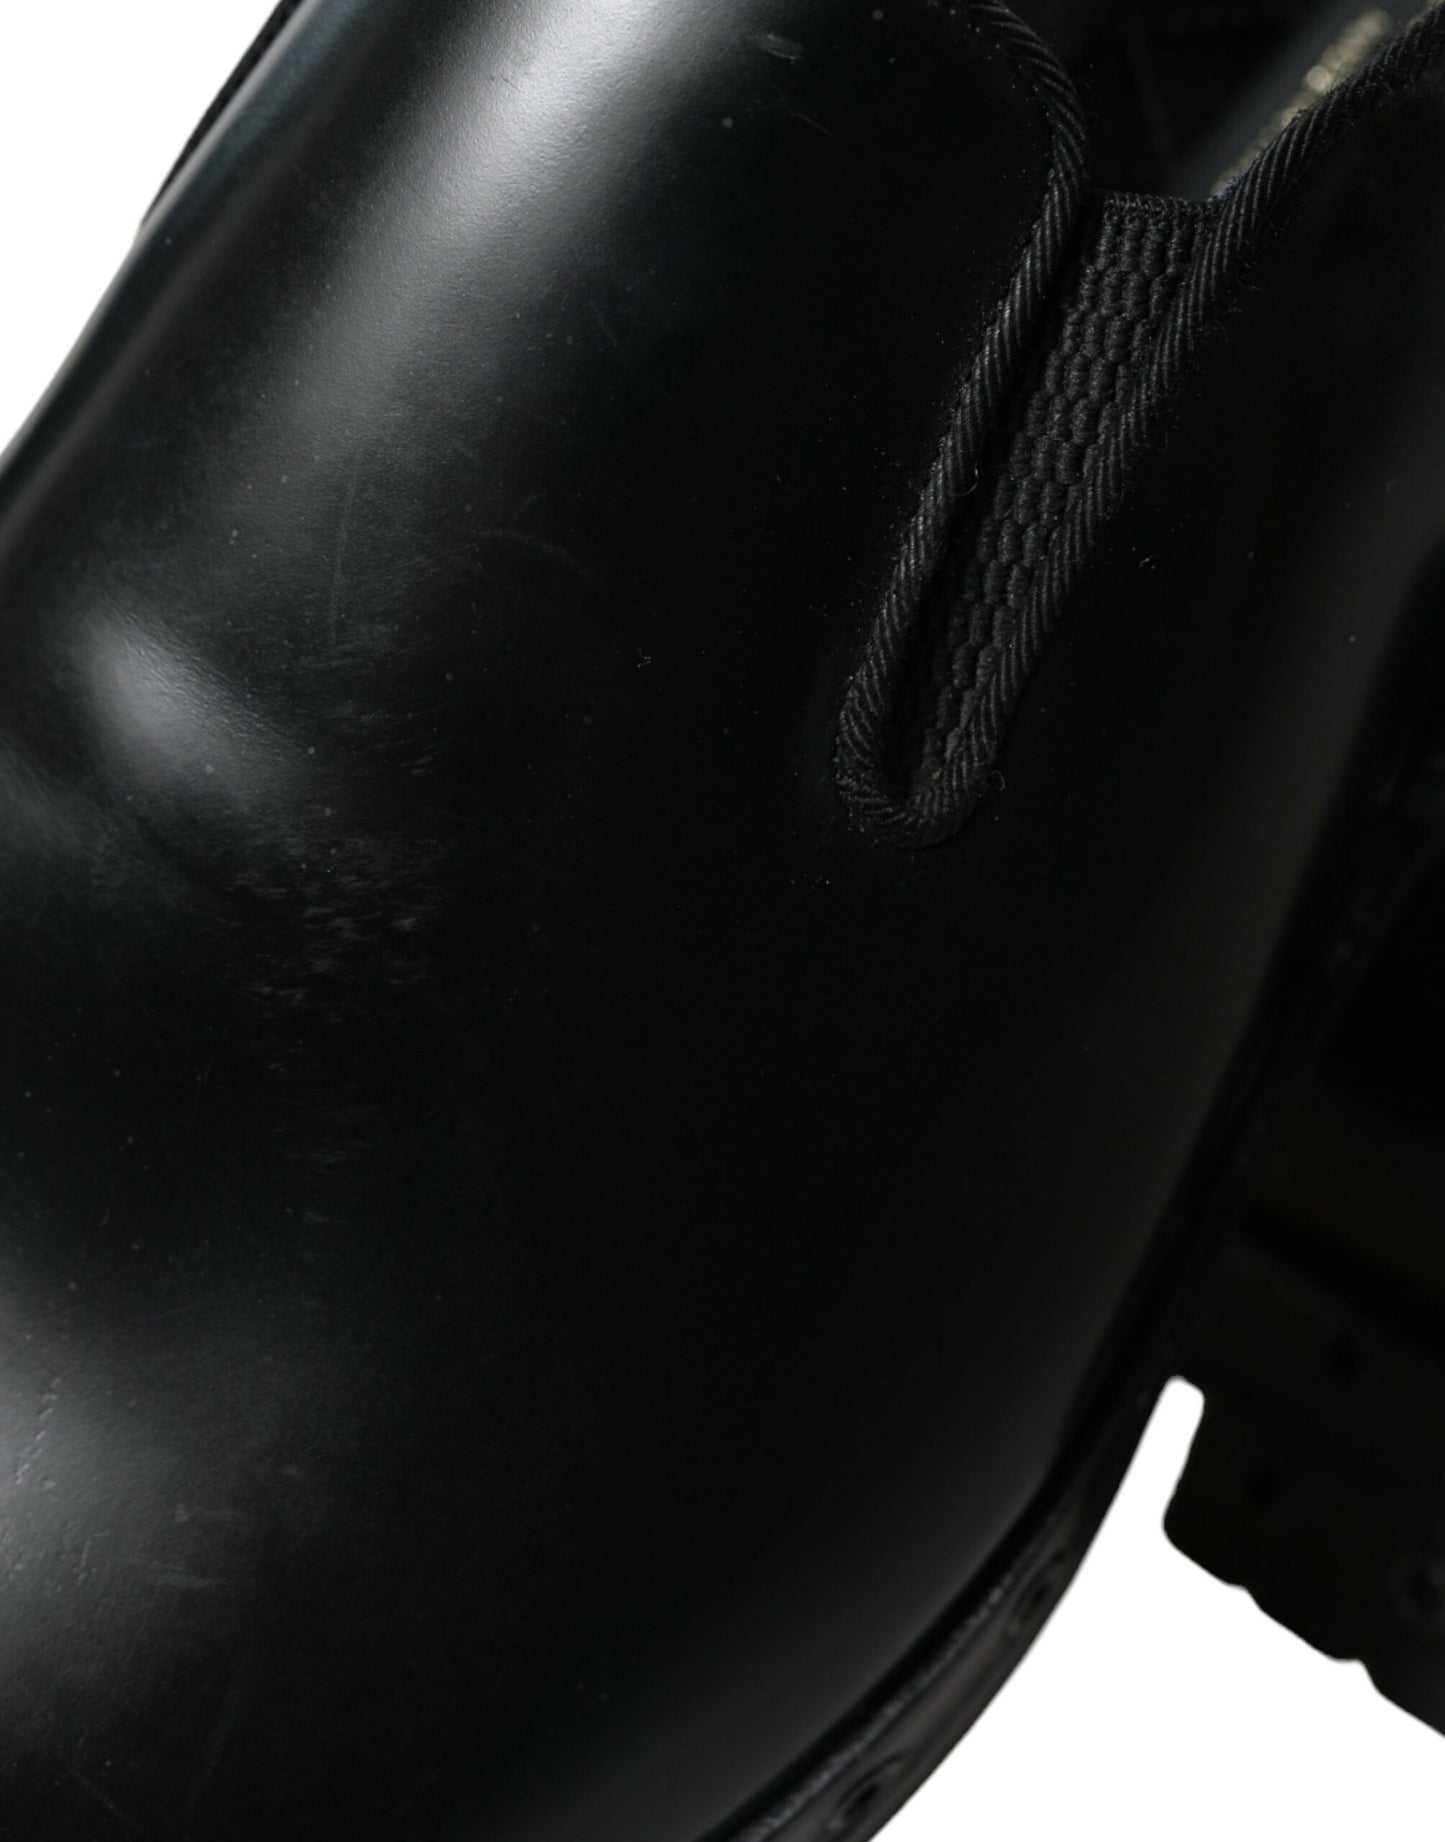 Dolce & Gabbana Black Leather Studded Loafers Dress Shoes | Fashionsarah.com